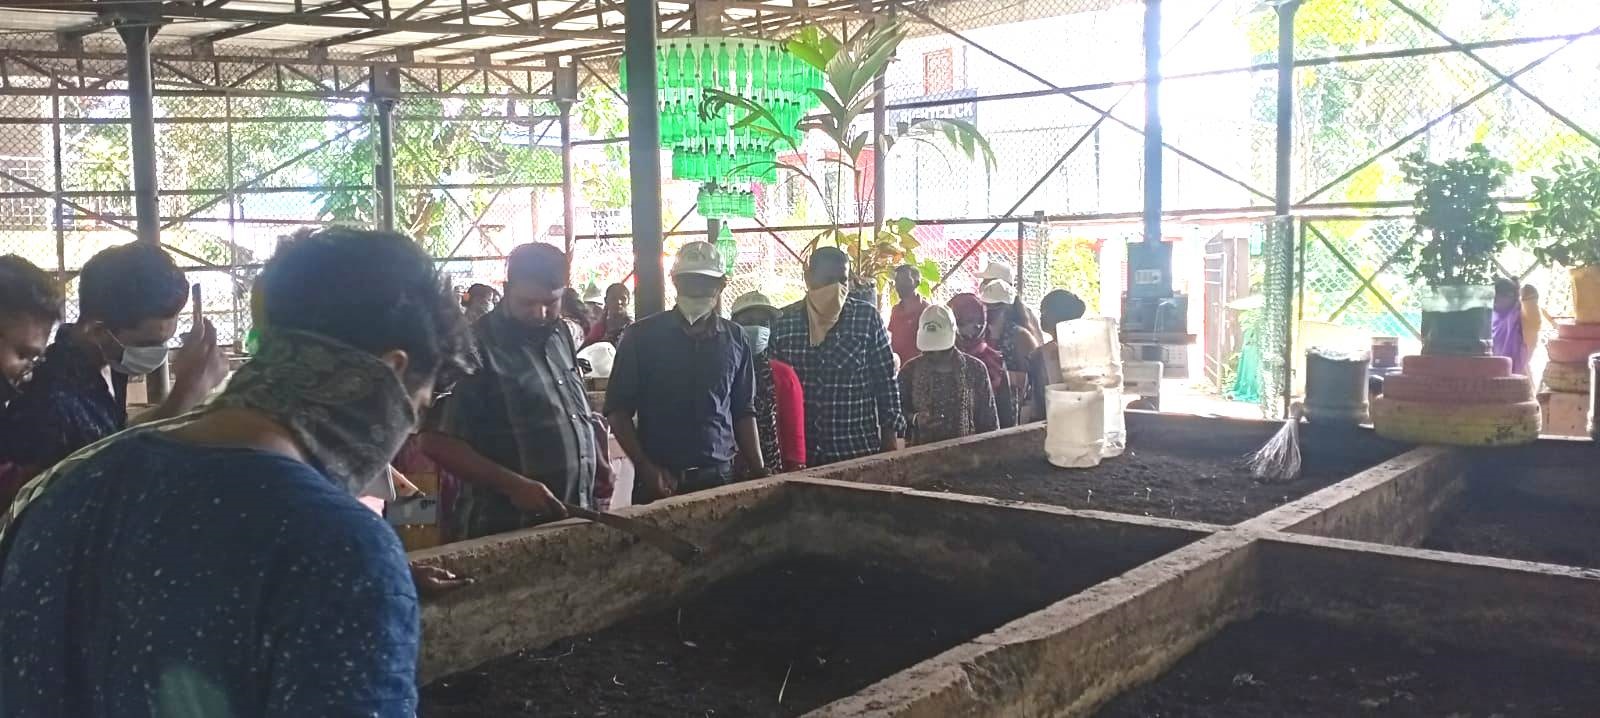 Participants observing the composting pit at Gandhi Park, Port Blair